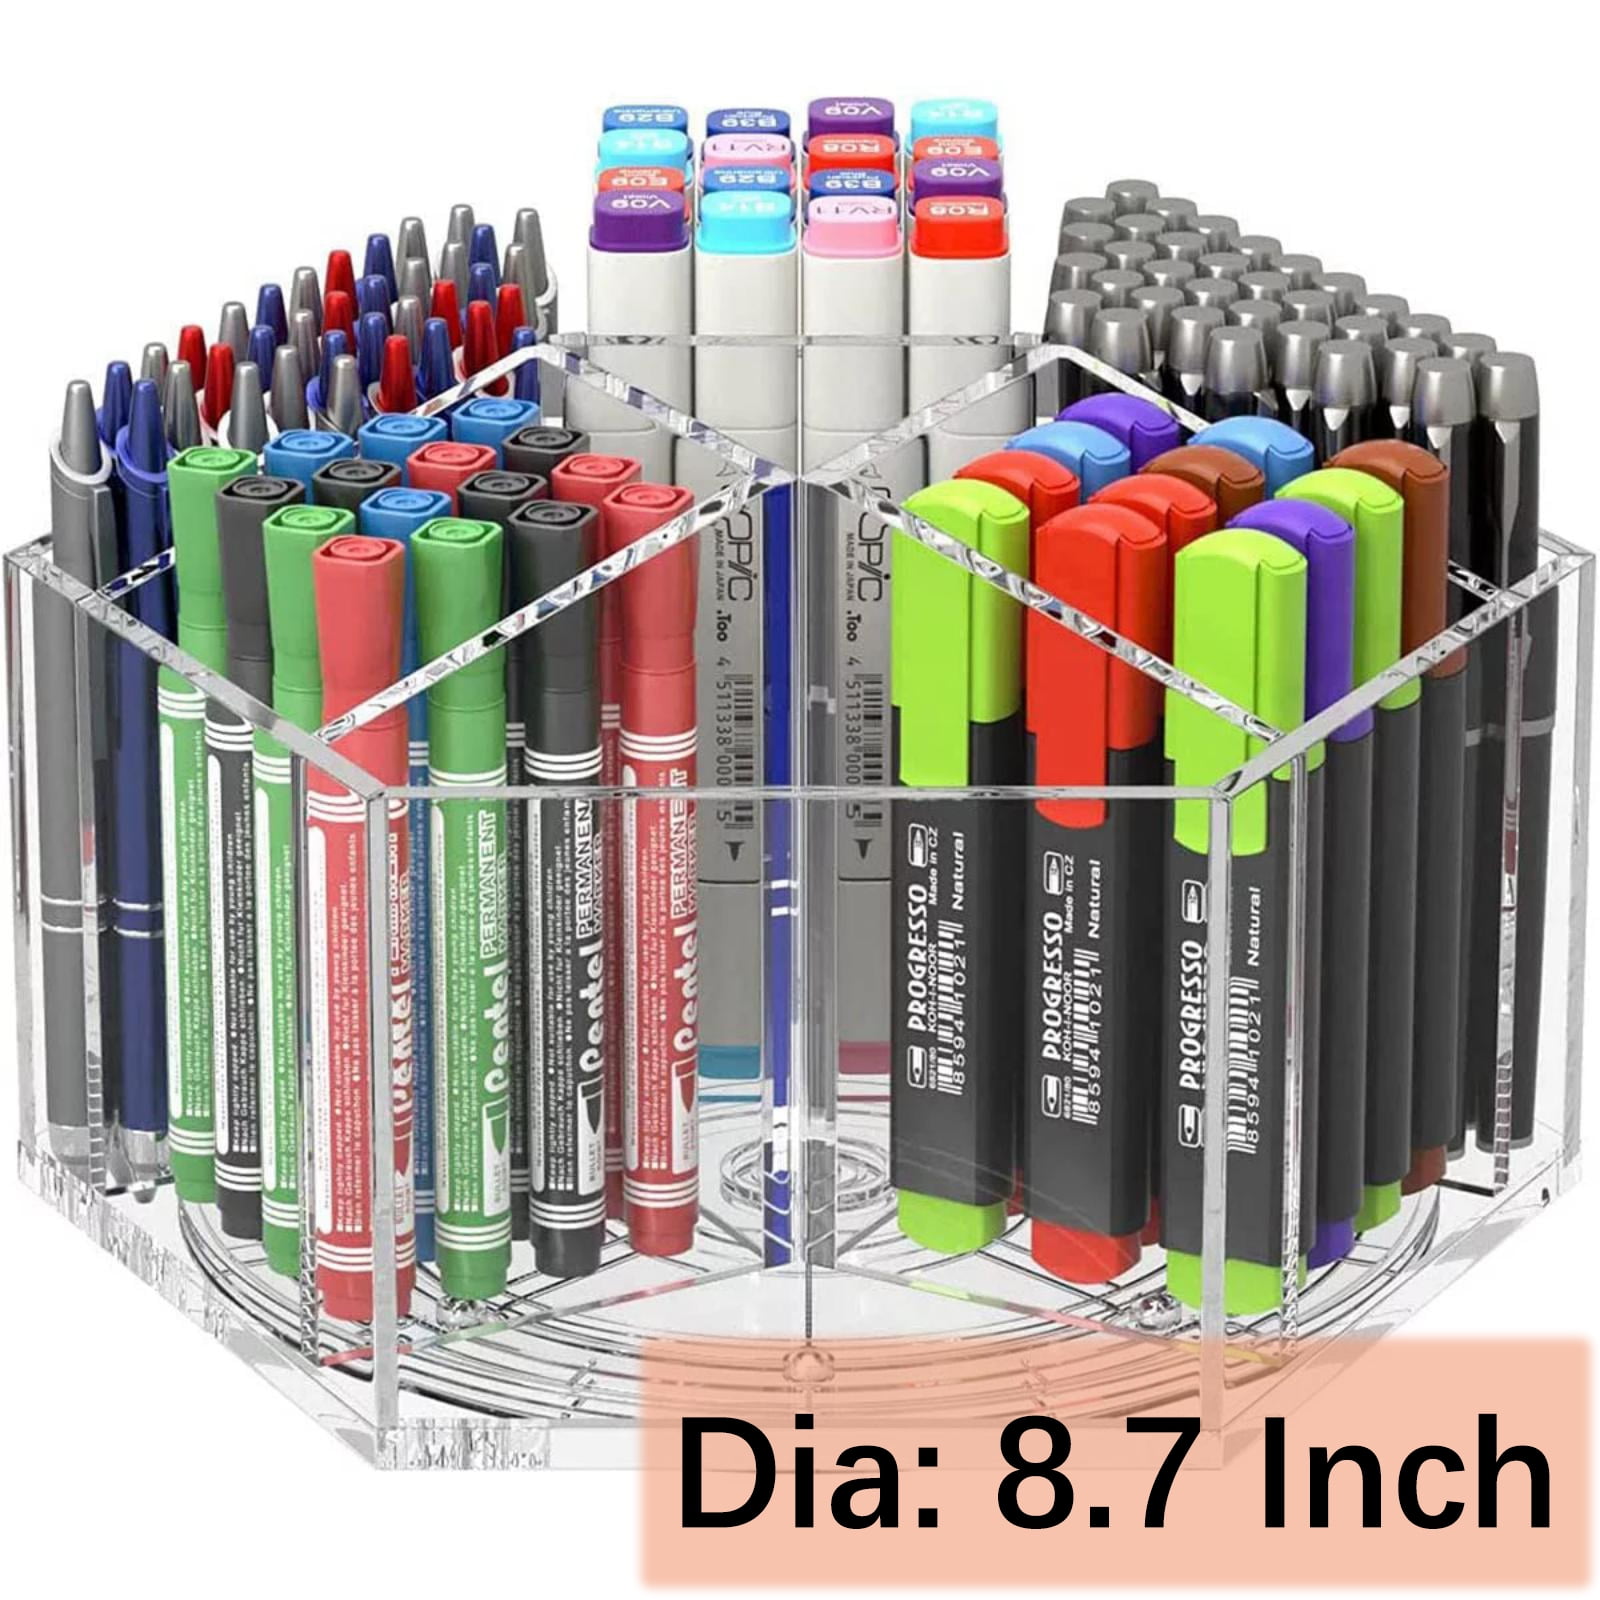 NiOffice Acrylic Pen Holder, 4 Compartments Multi-Capacity Desk Organizer  360° Rotating Clear Pencil Holder for Desk Aesthetic School Supplies, Desk